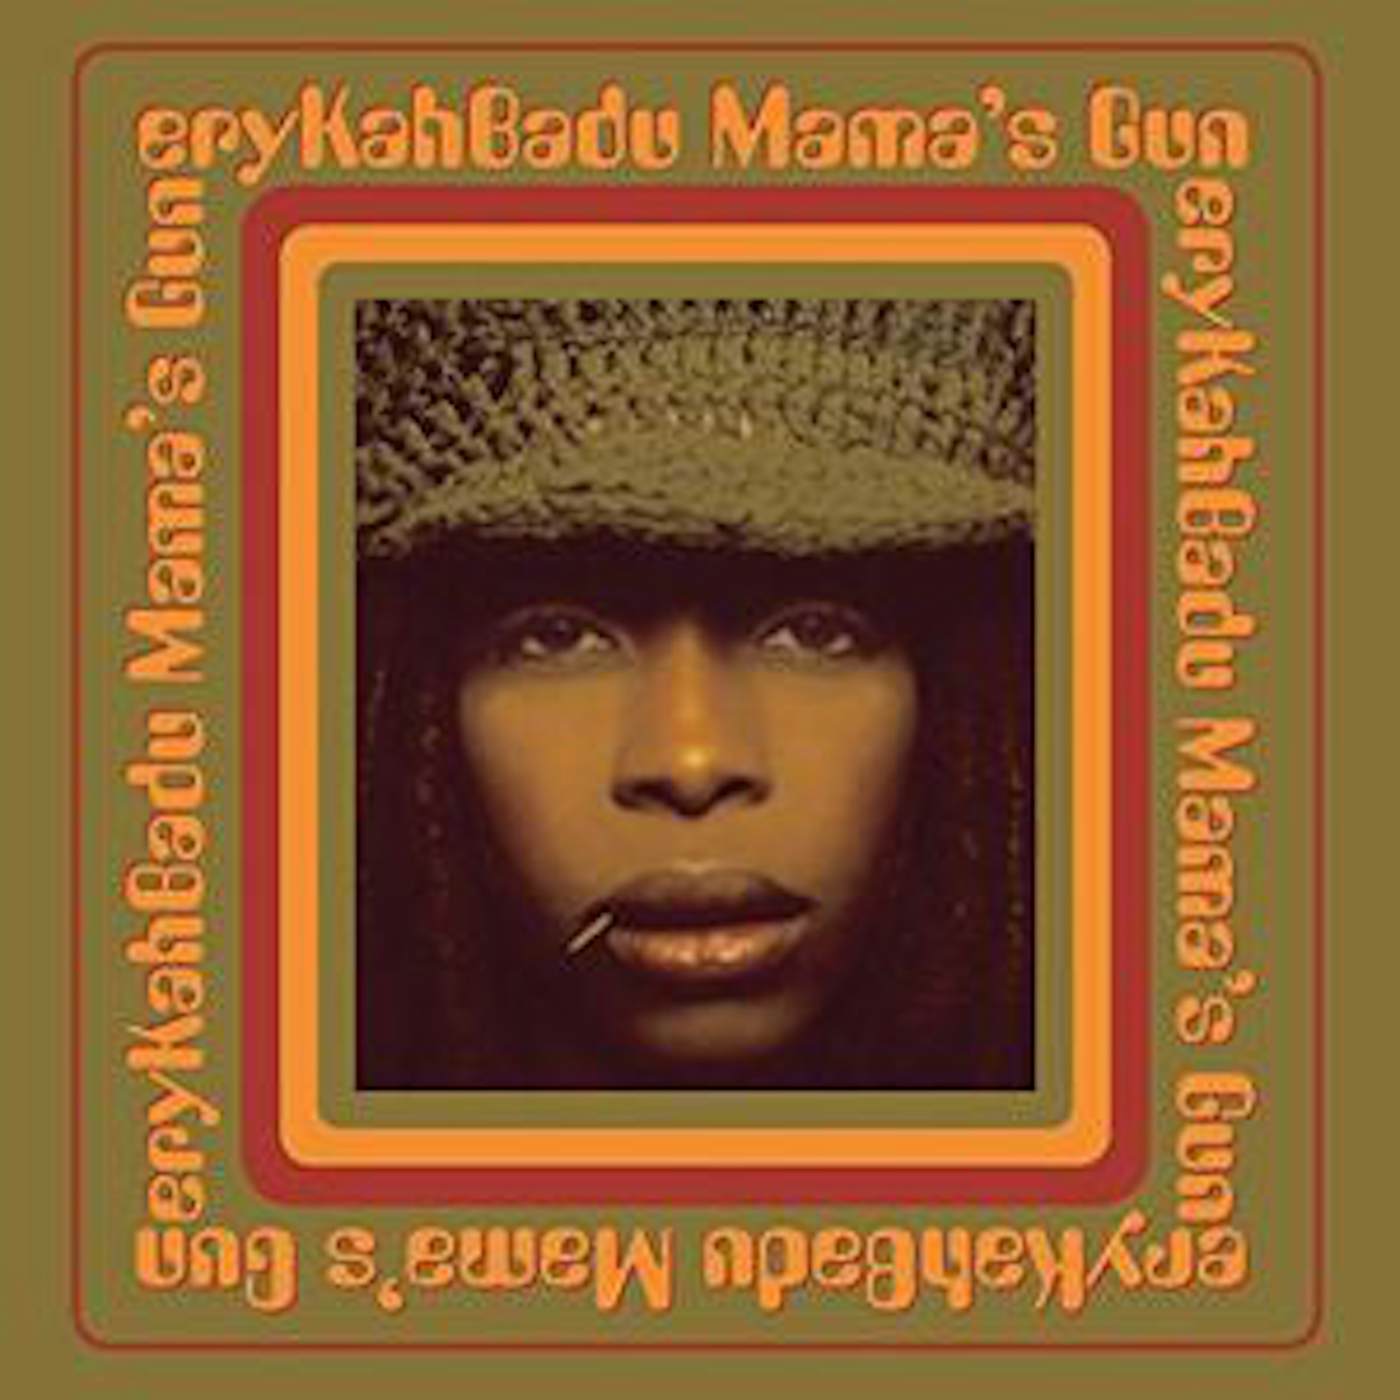 Erykah Badu LP Vinyl Record - Mama's Gun